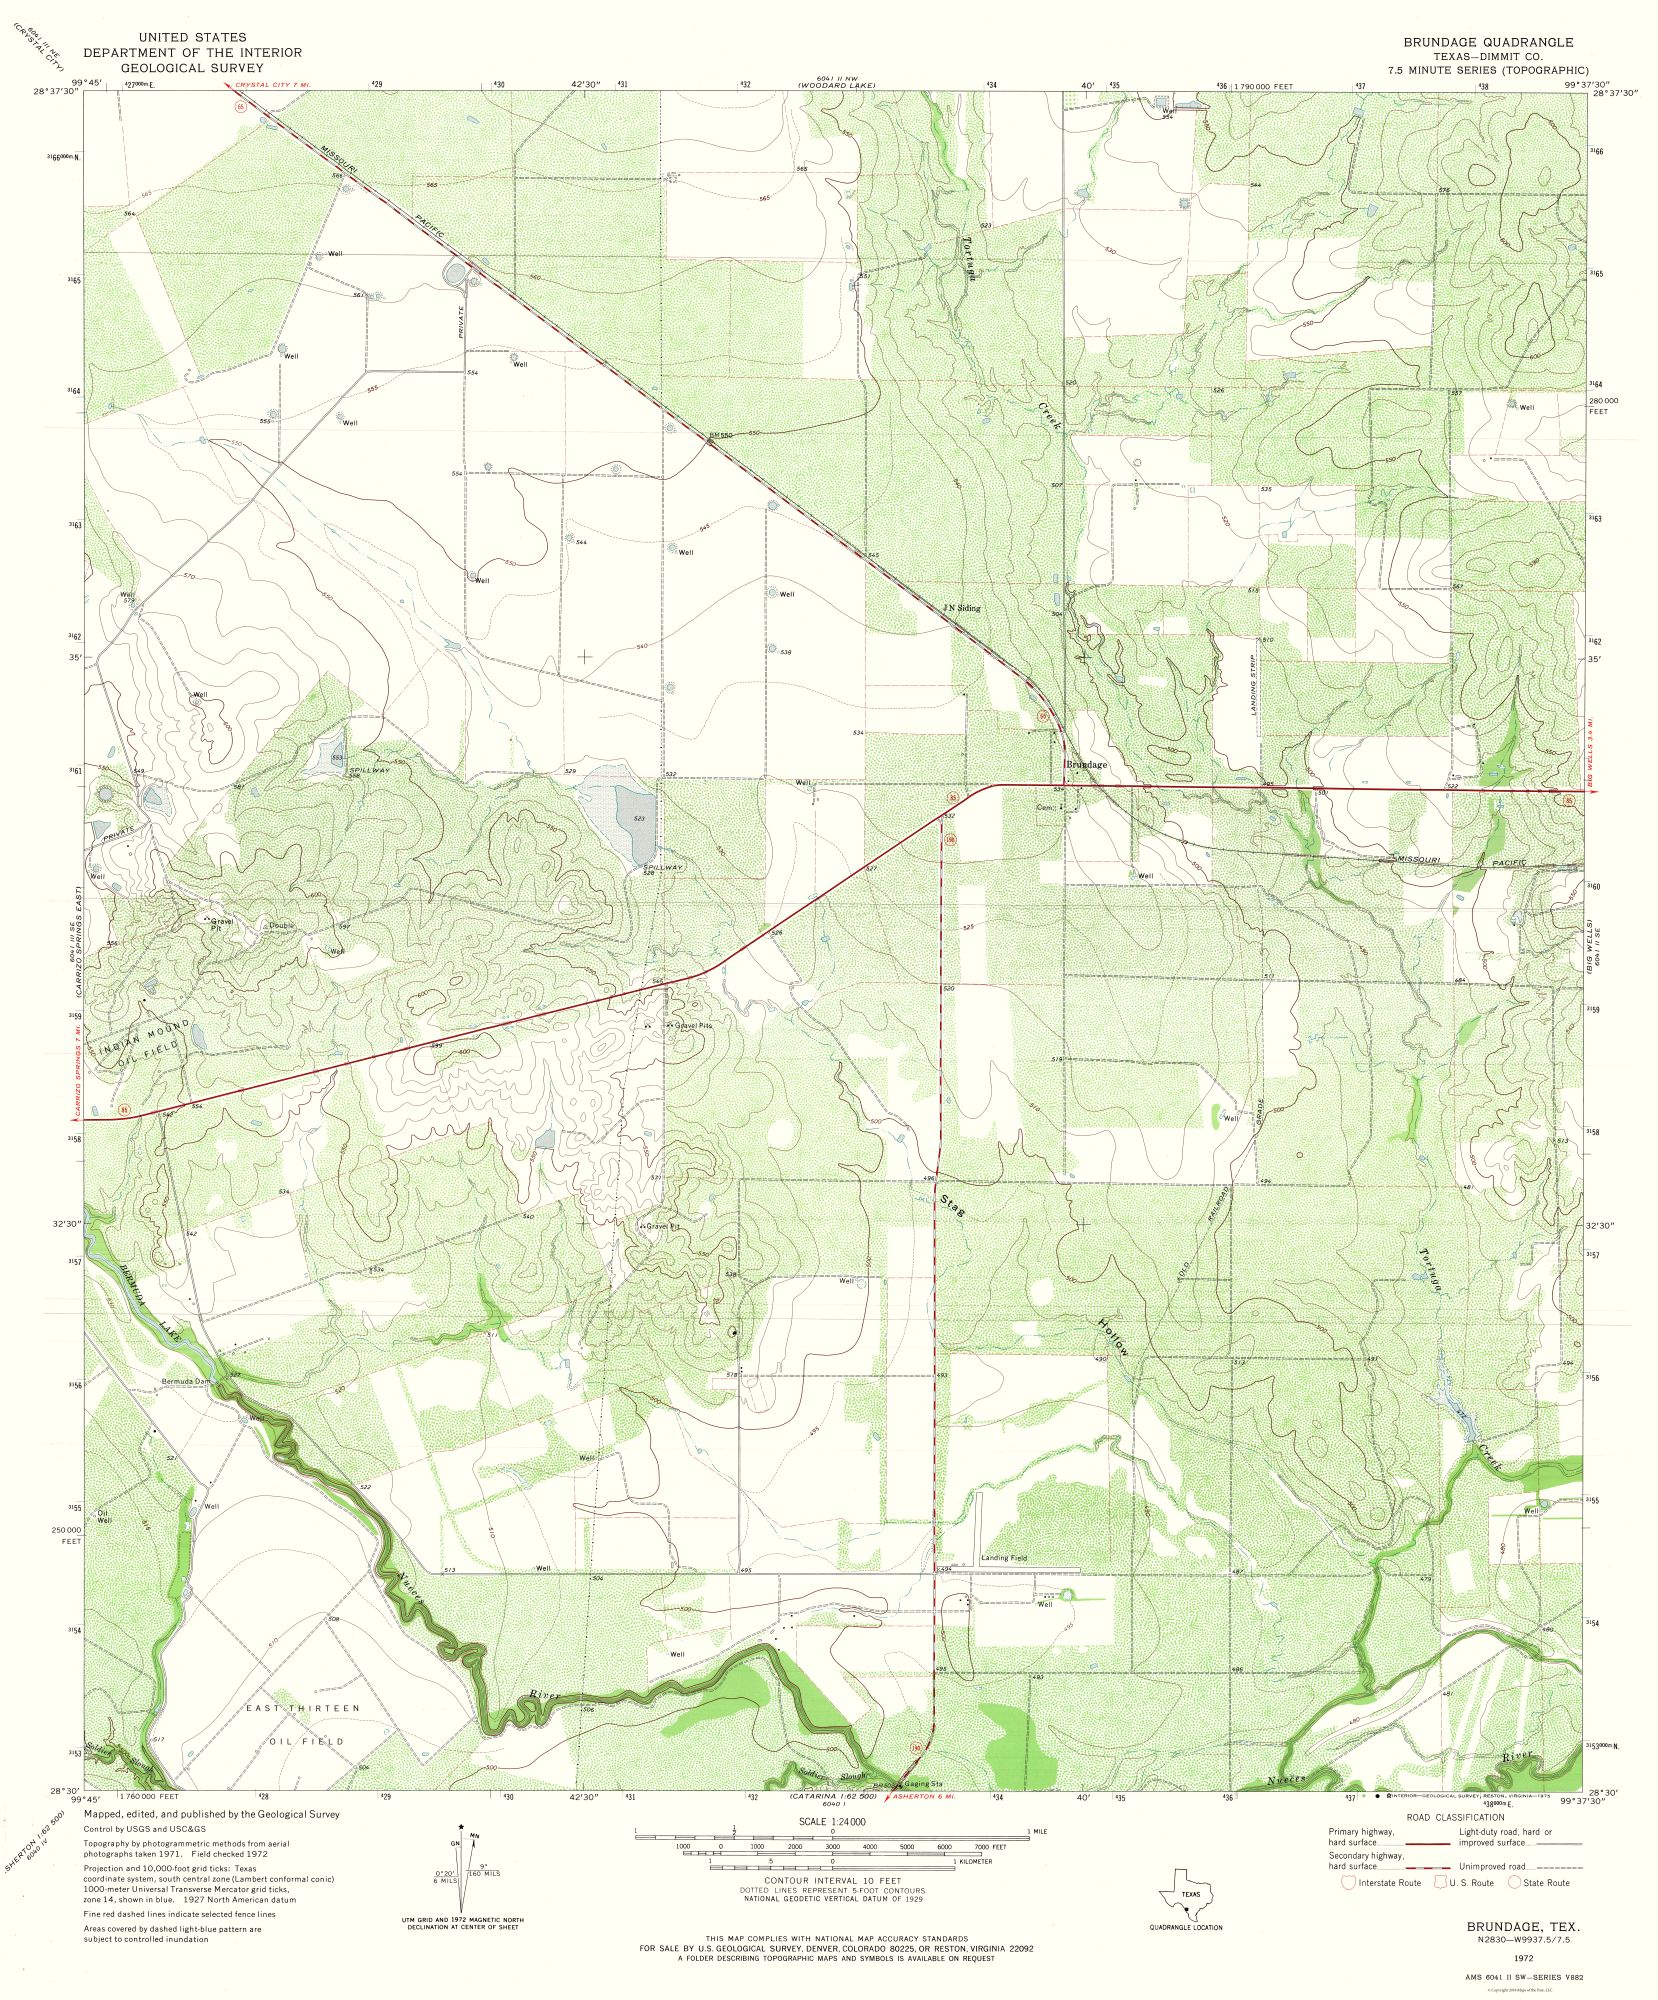 Topo Map - Brundage Texas Quad - USGS 1972 - 23.00 x 27.75 - Glossy Satin Paper - image 1 of 1